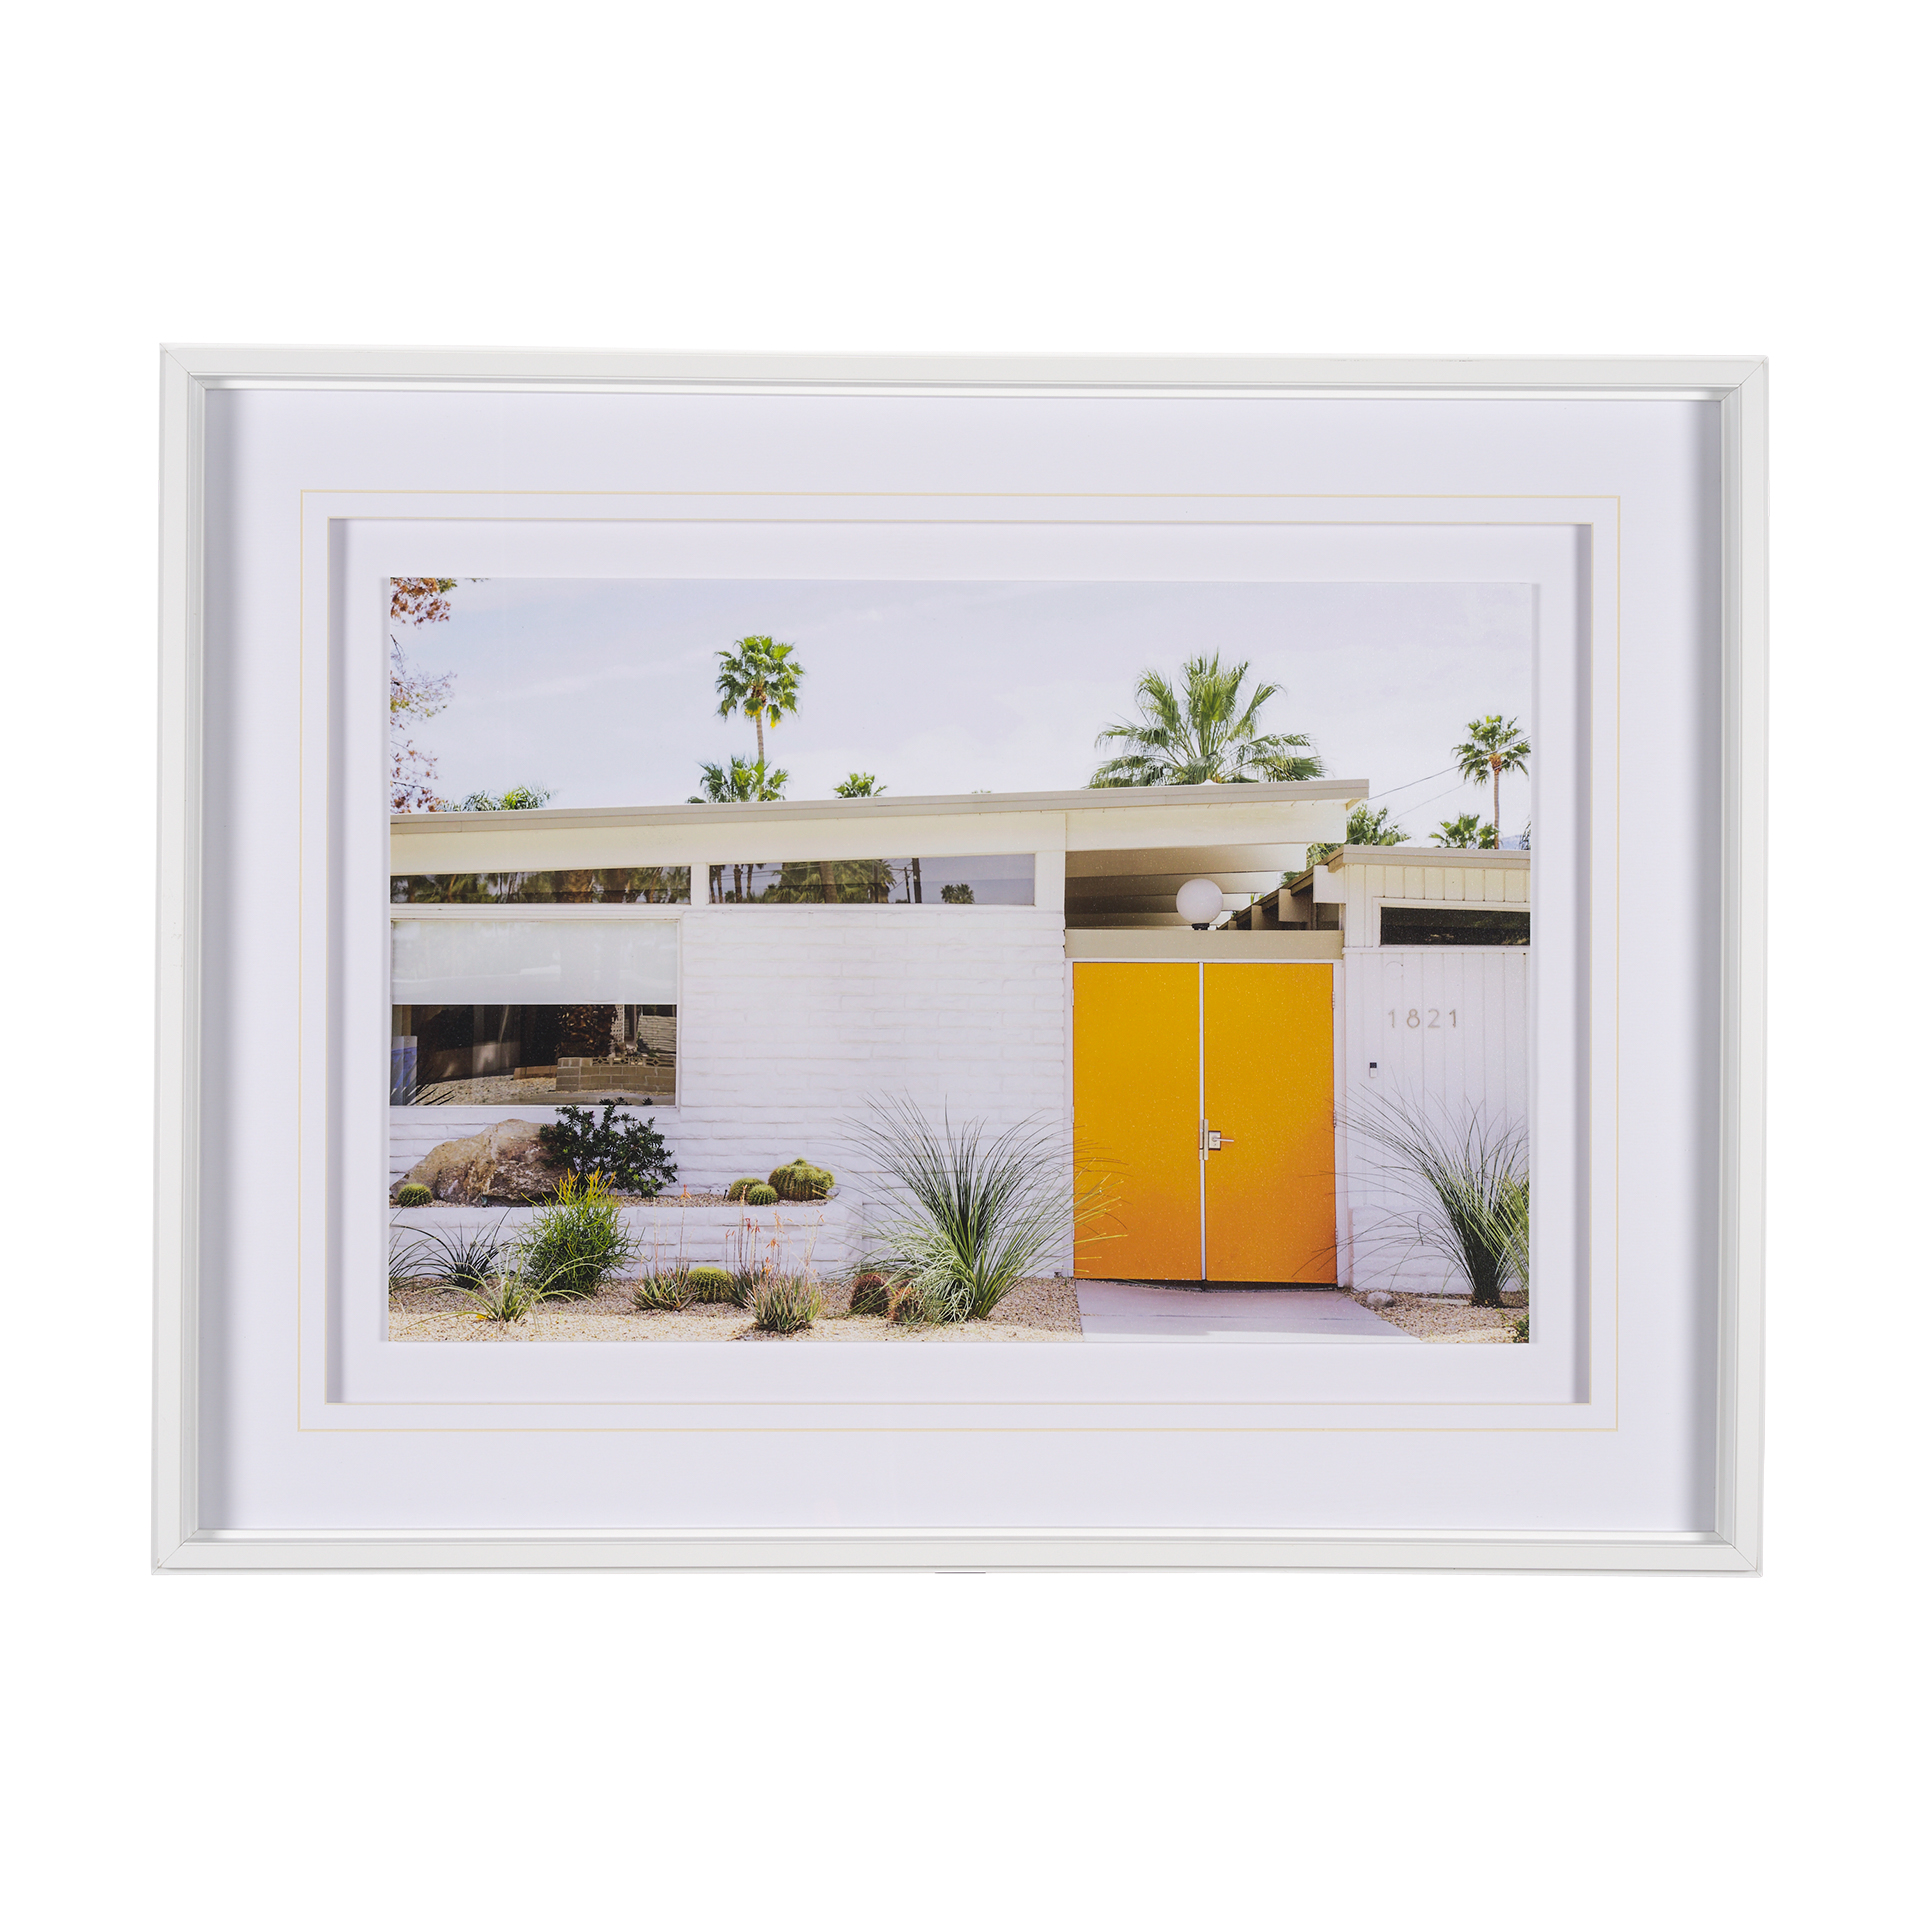 Palm Springs Villa - Puerta Amarilla (42 x 32)